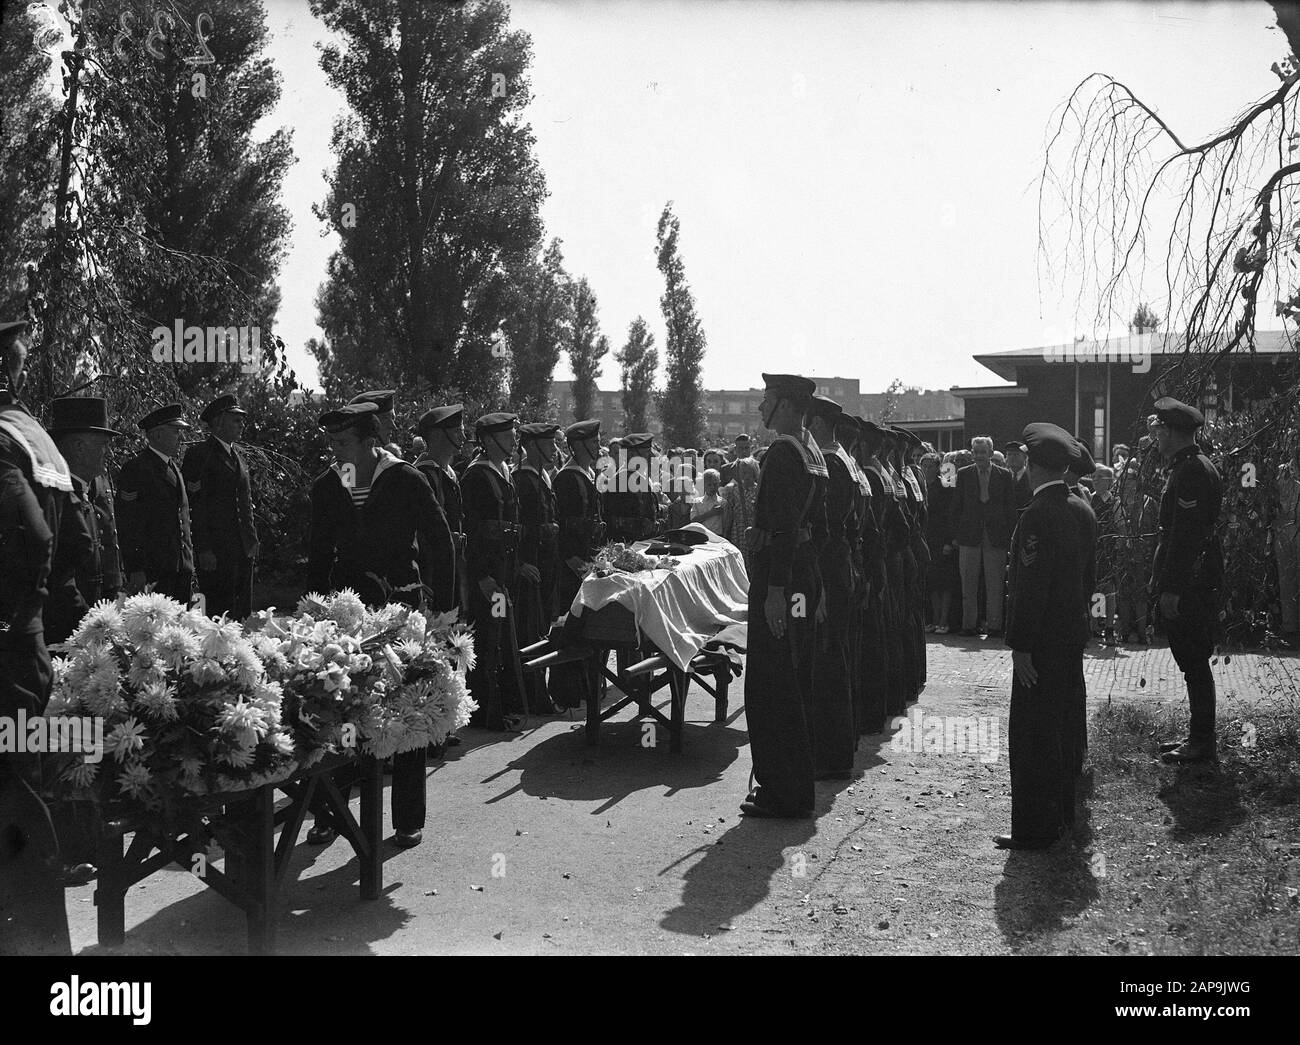 Funeral telegraphist der marine Date: August 31, 1947 Keywords: Funeral, MARINE Stock Photo